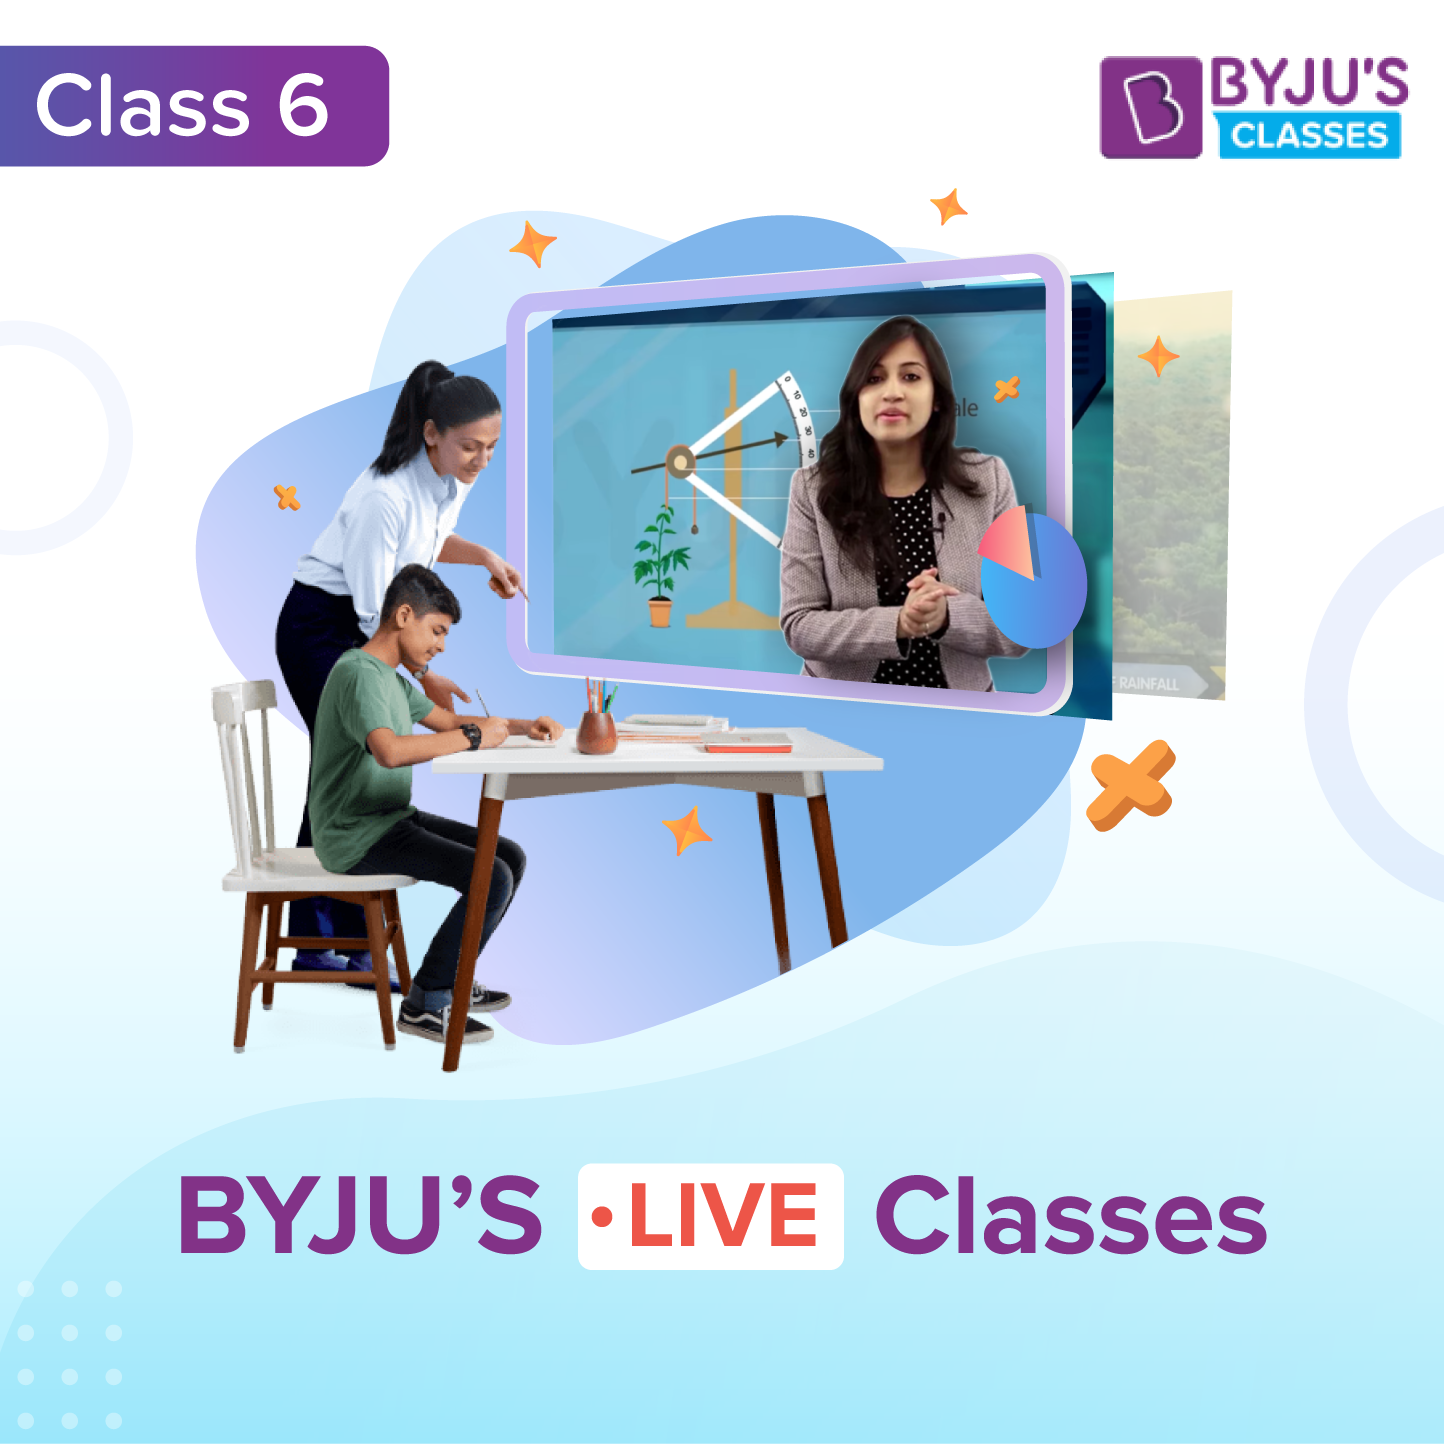 BYJU'S Live Classes - Class 6